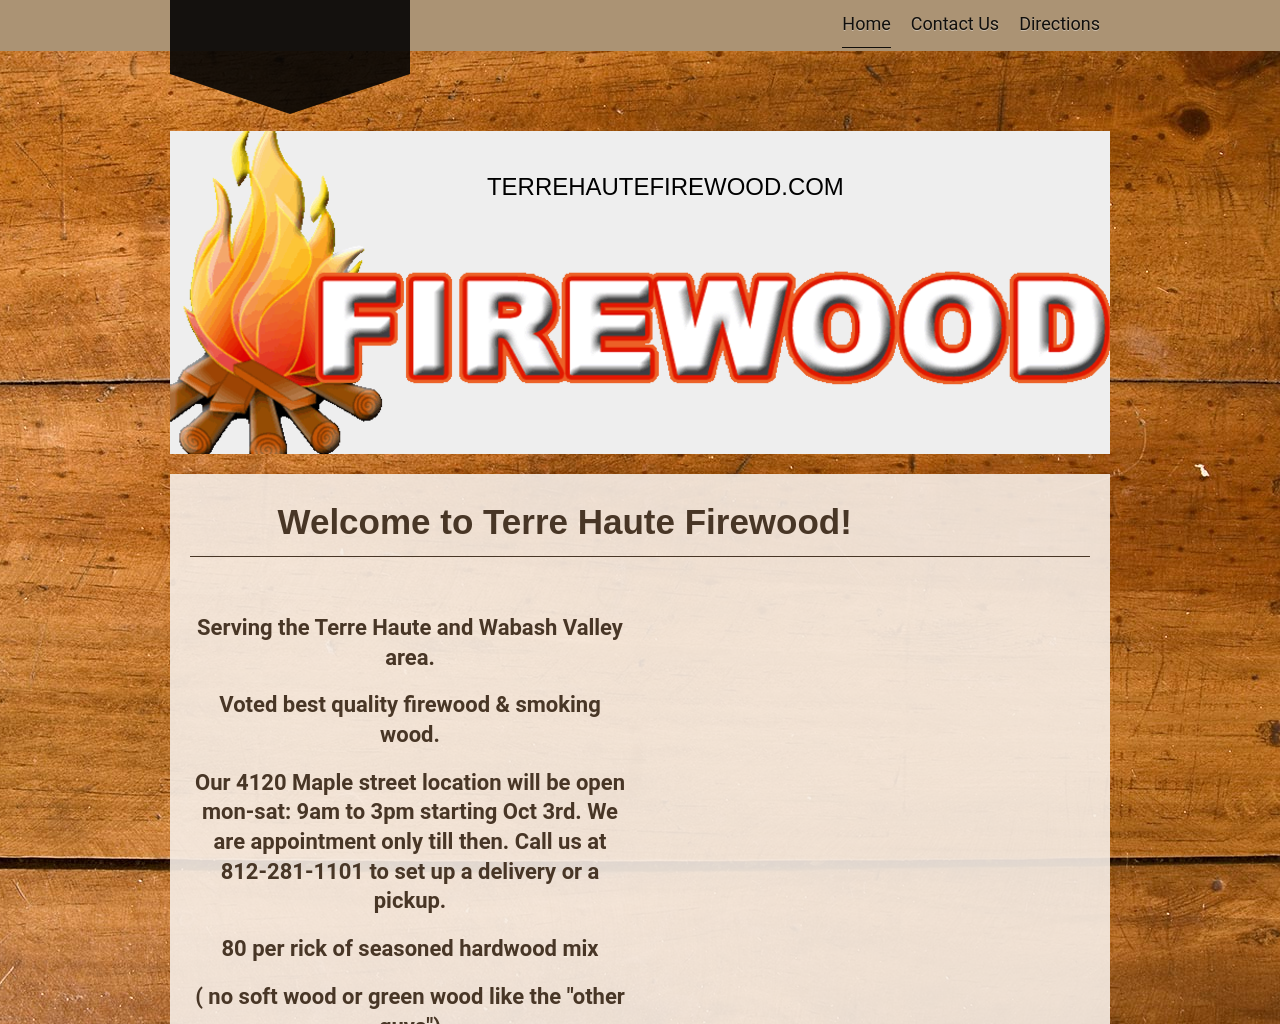 terrehautefirewood.com